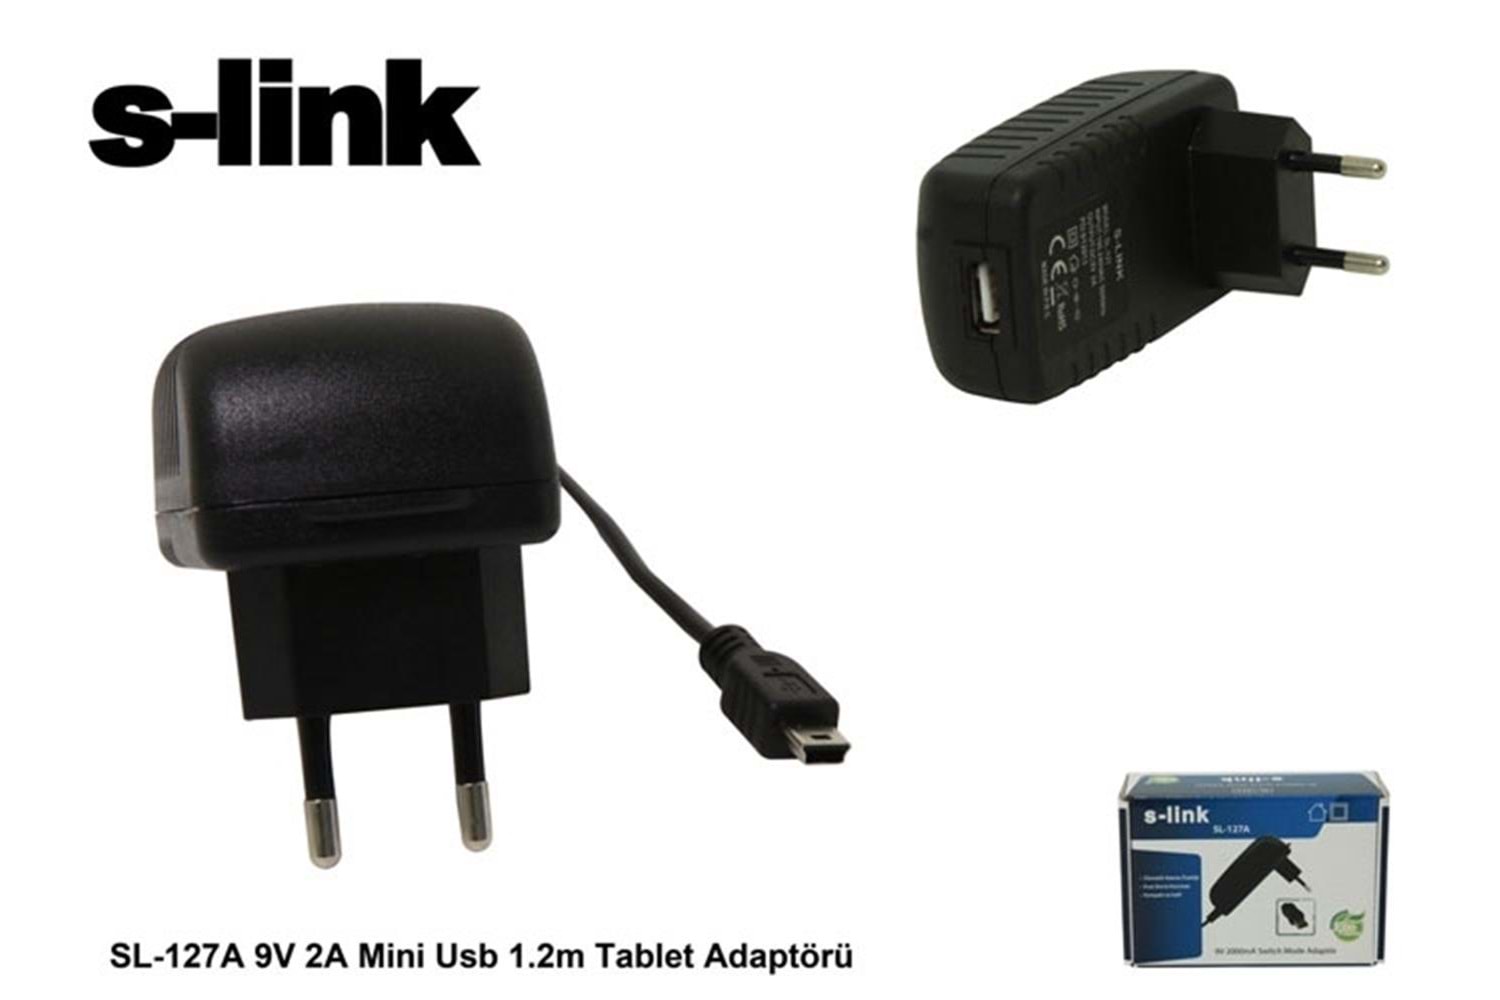 S-link SL-127A 9v 2a Mini Usb Tablet Adaptörü